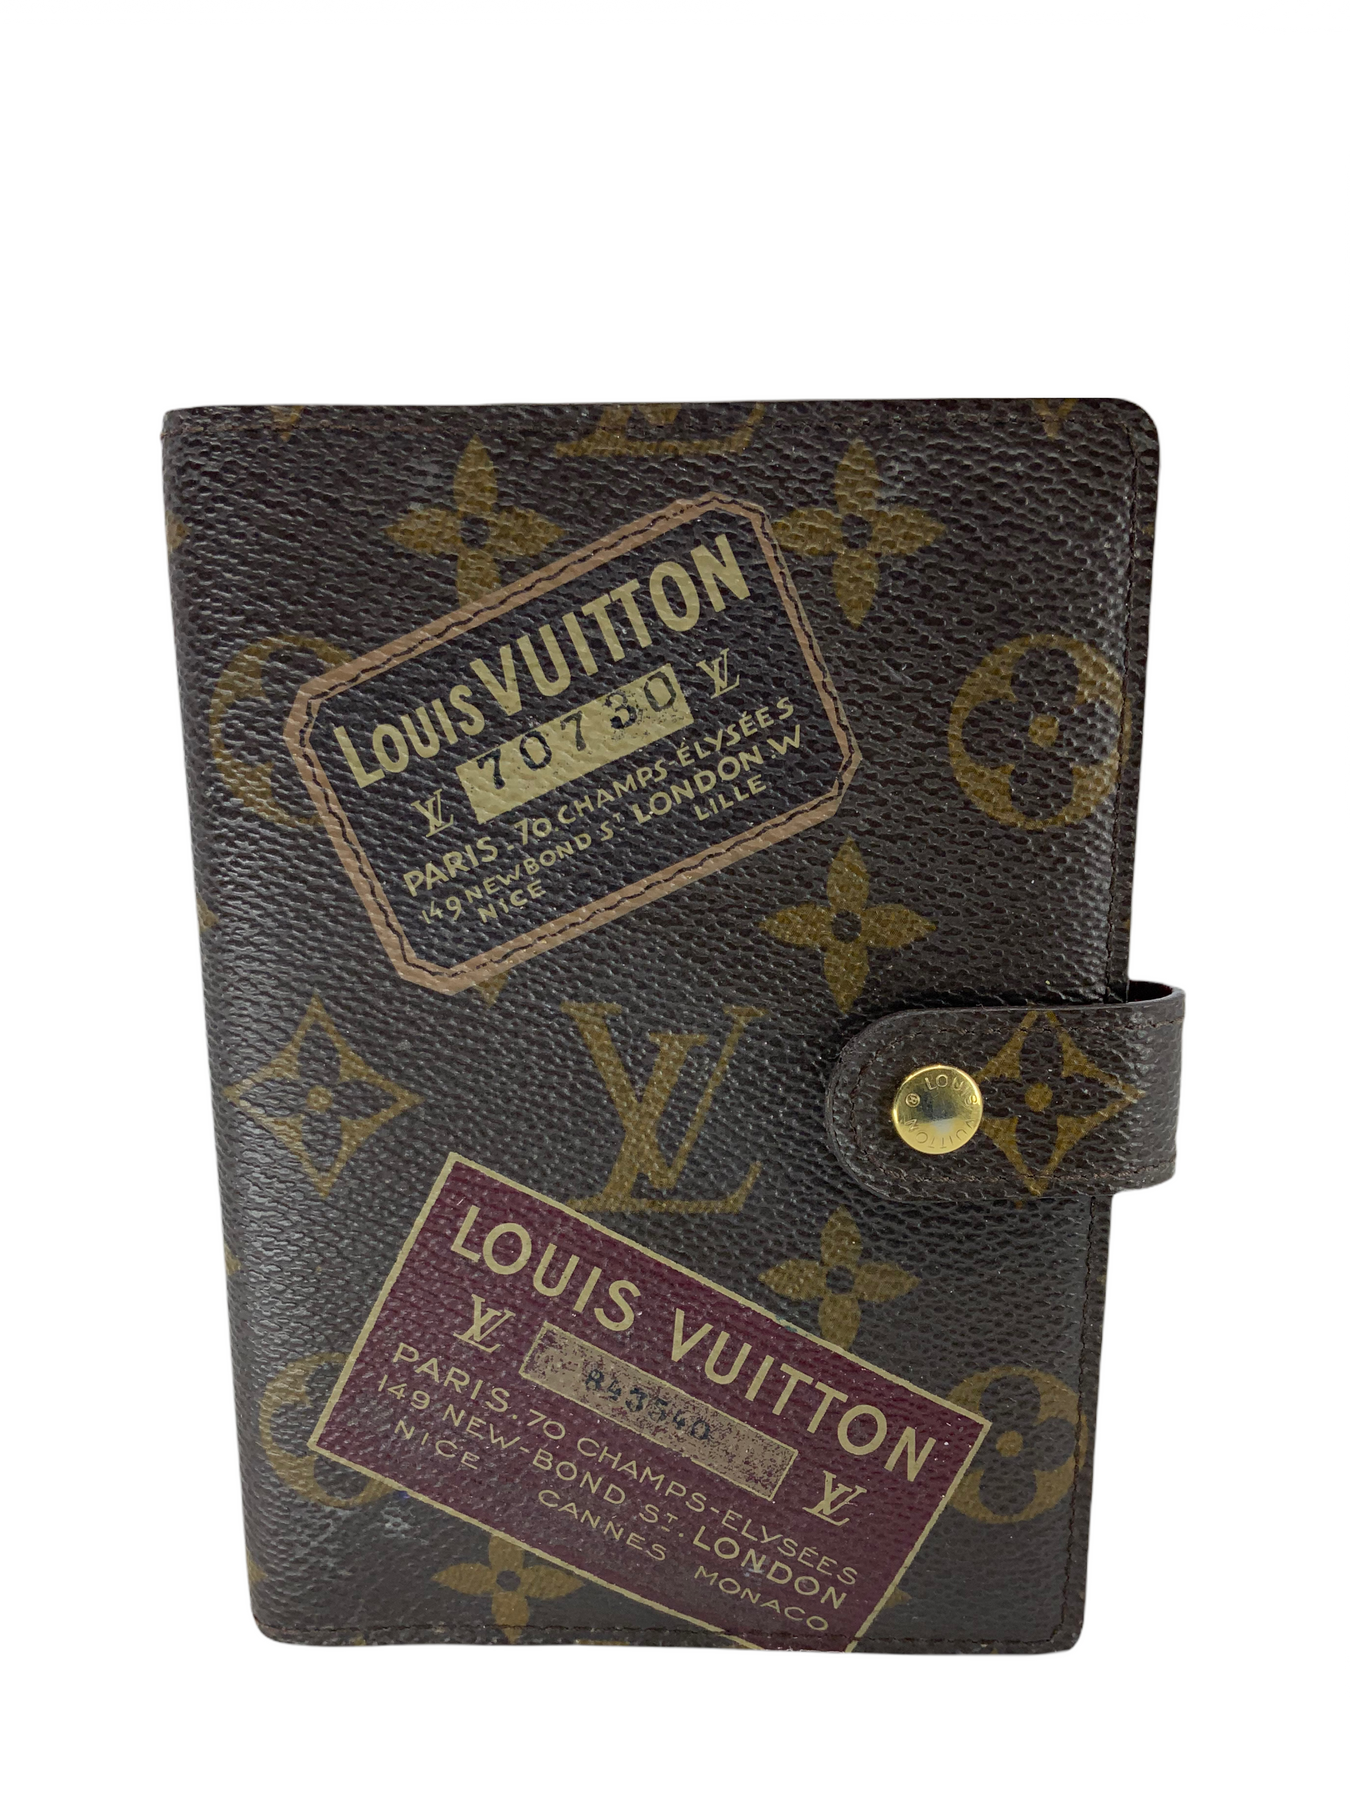 Louis Vuitton PM agenda {MONOGRAM} - The CC collection